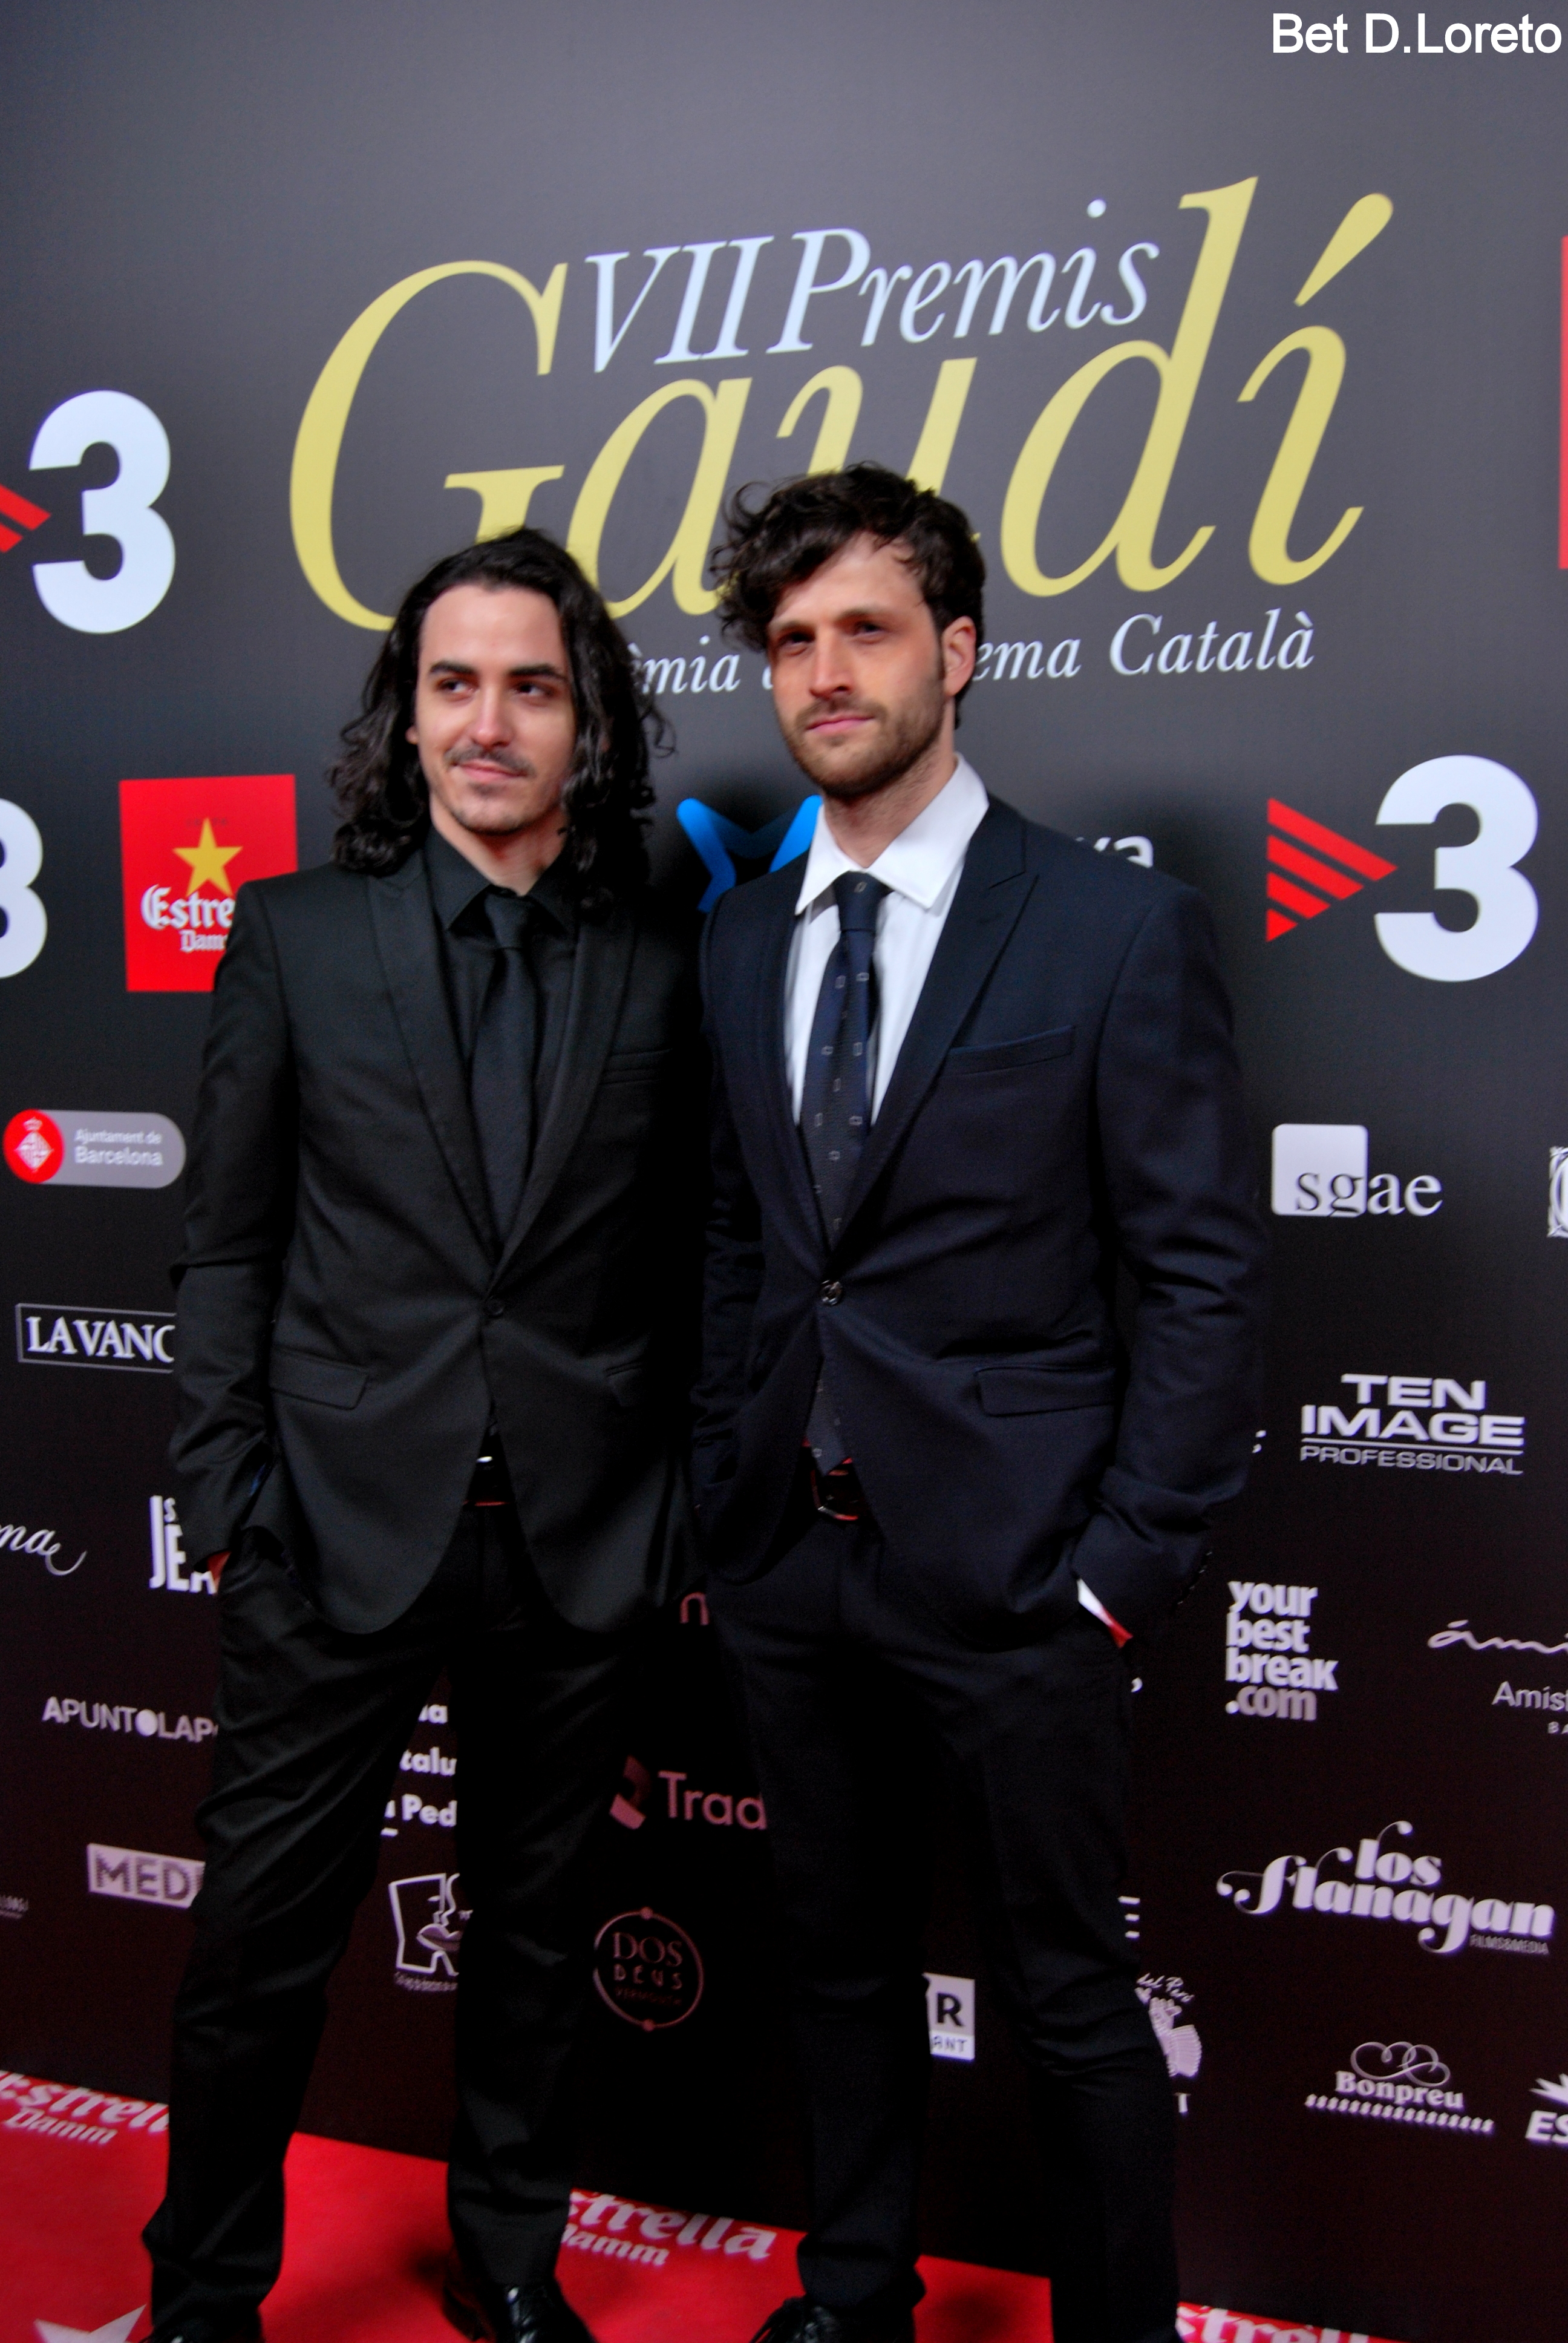 Roger Batalla with Santi Bayón at Premis Gaudí 2015 red carpet.